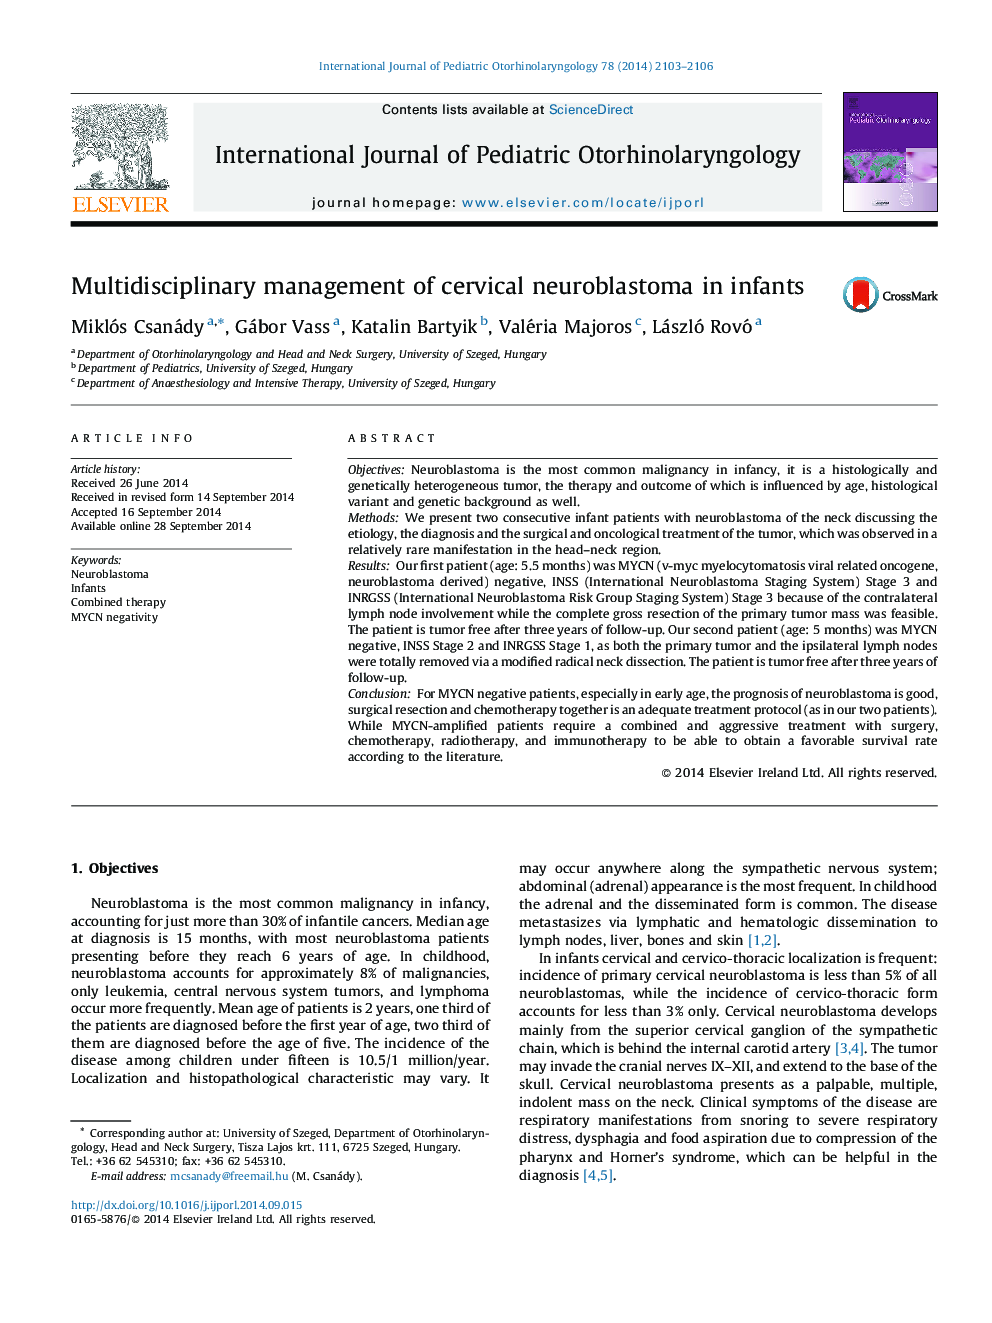 Multidisciplinary management of cervical neuroblastoma in infants